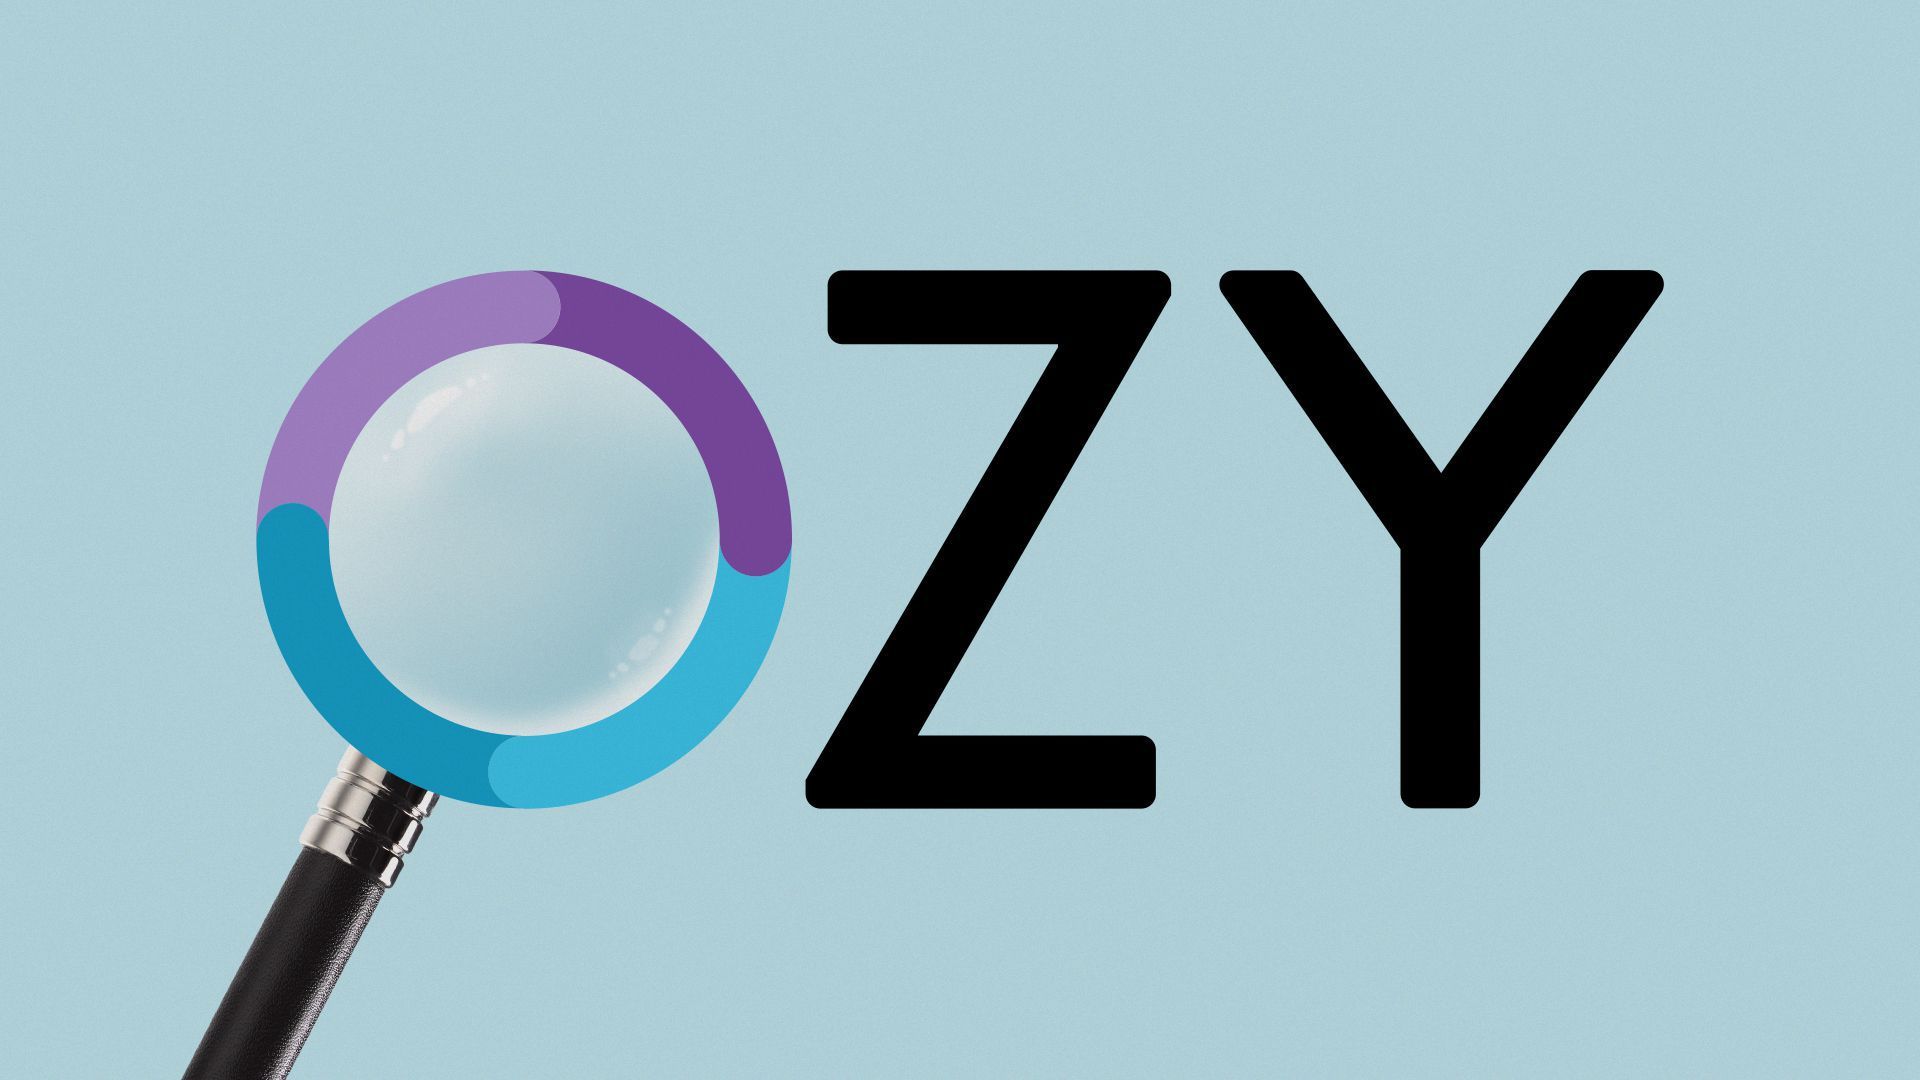 Illustration of OZY logo.